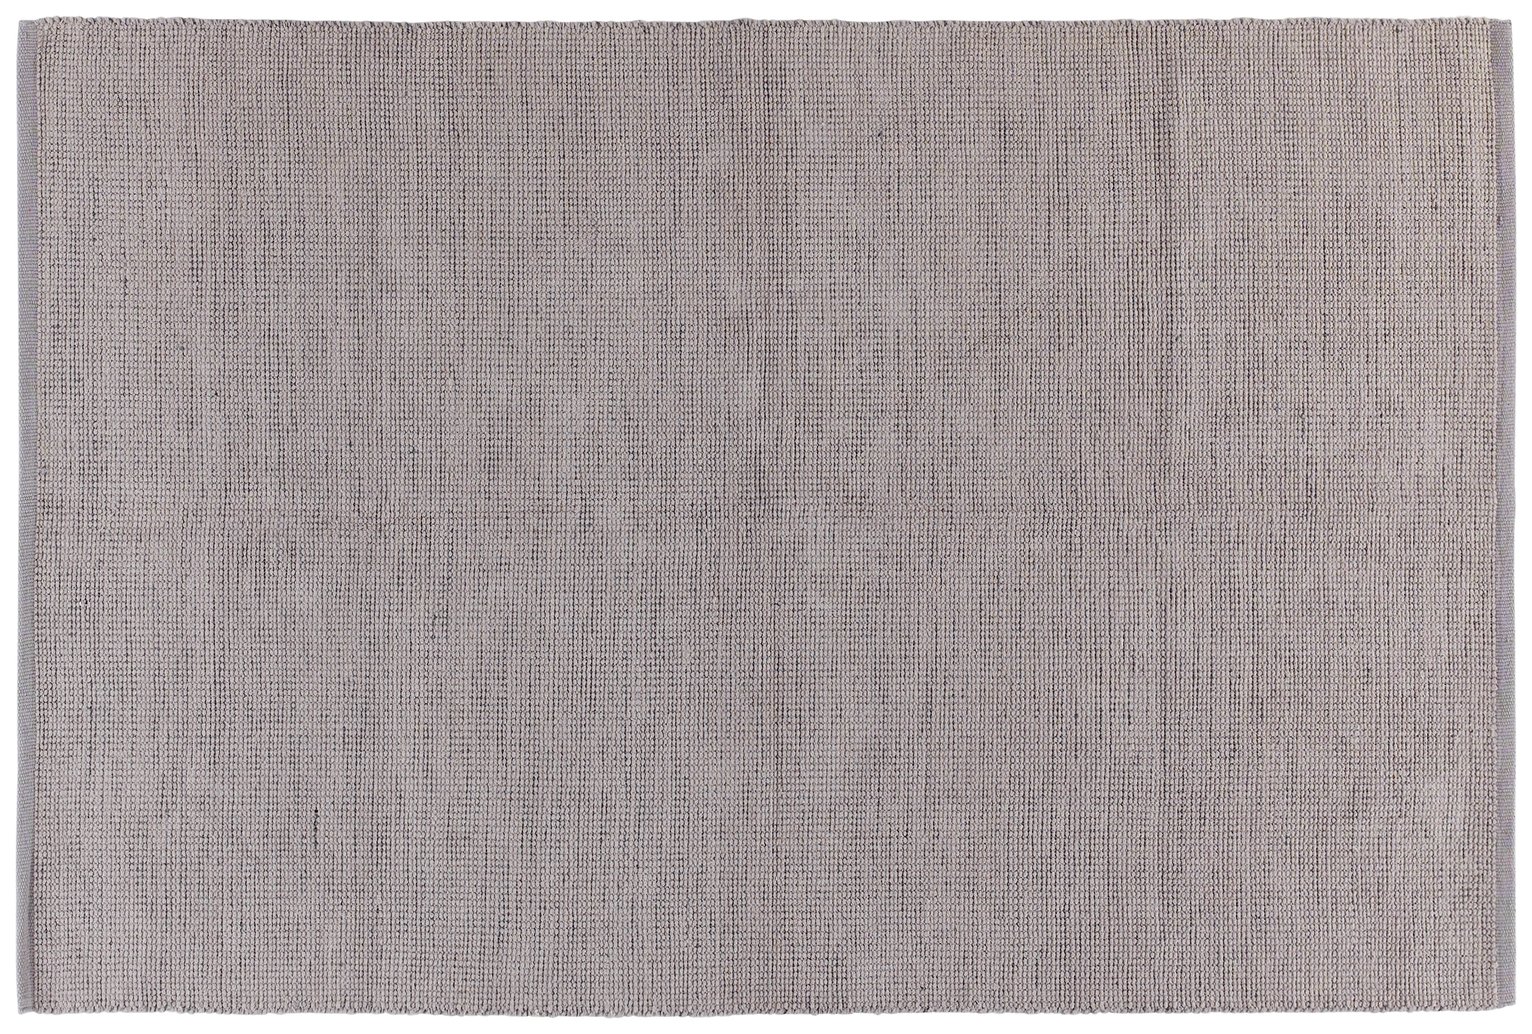 Habitat Ombre Rug - 120x180cm - Grey